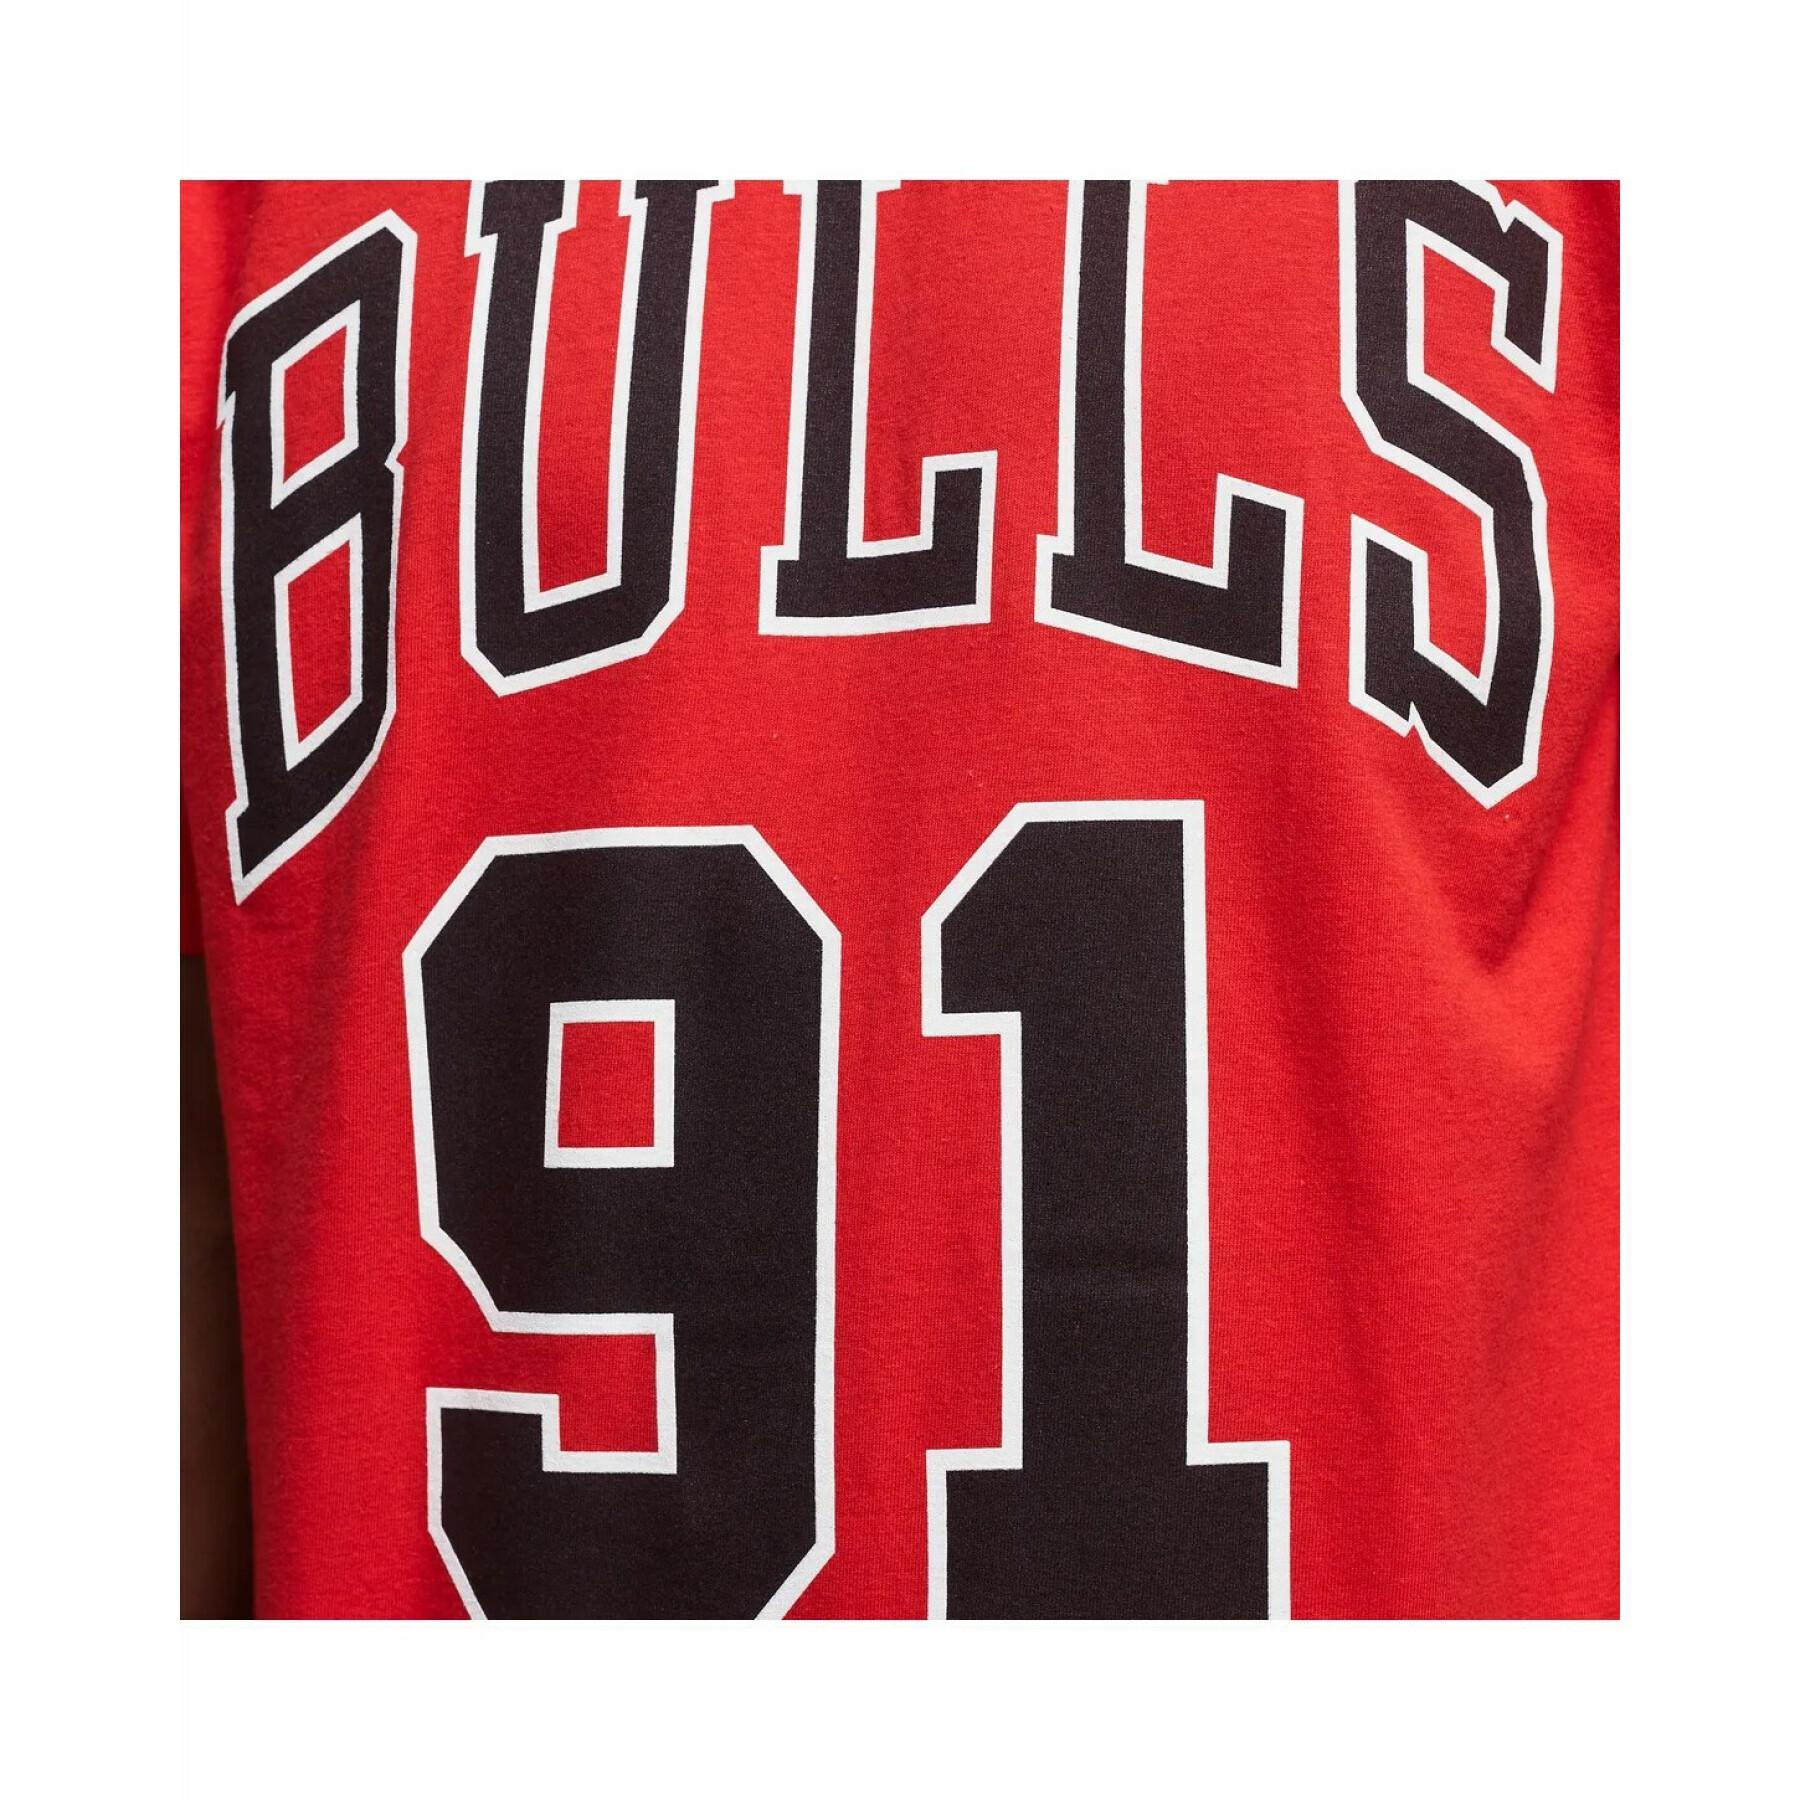 Last Dance T-shirt Chicago Bulls number 91